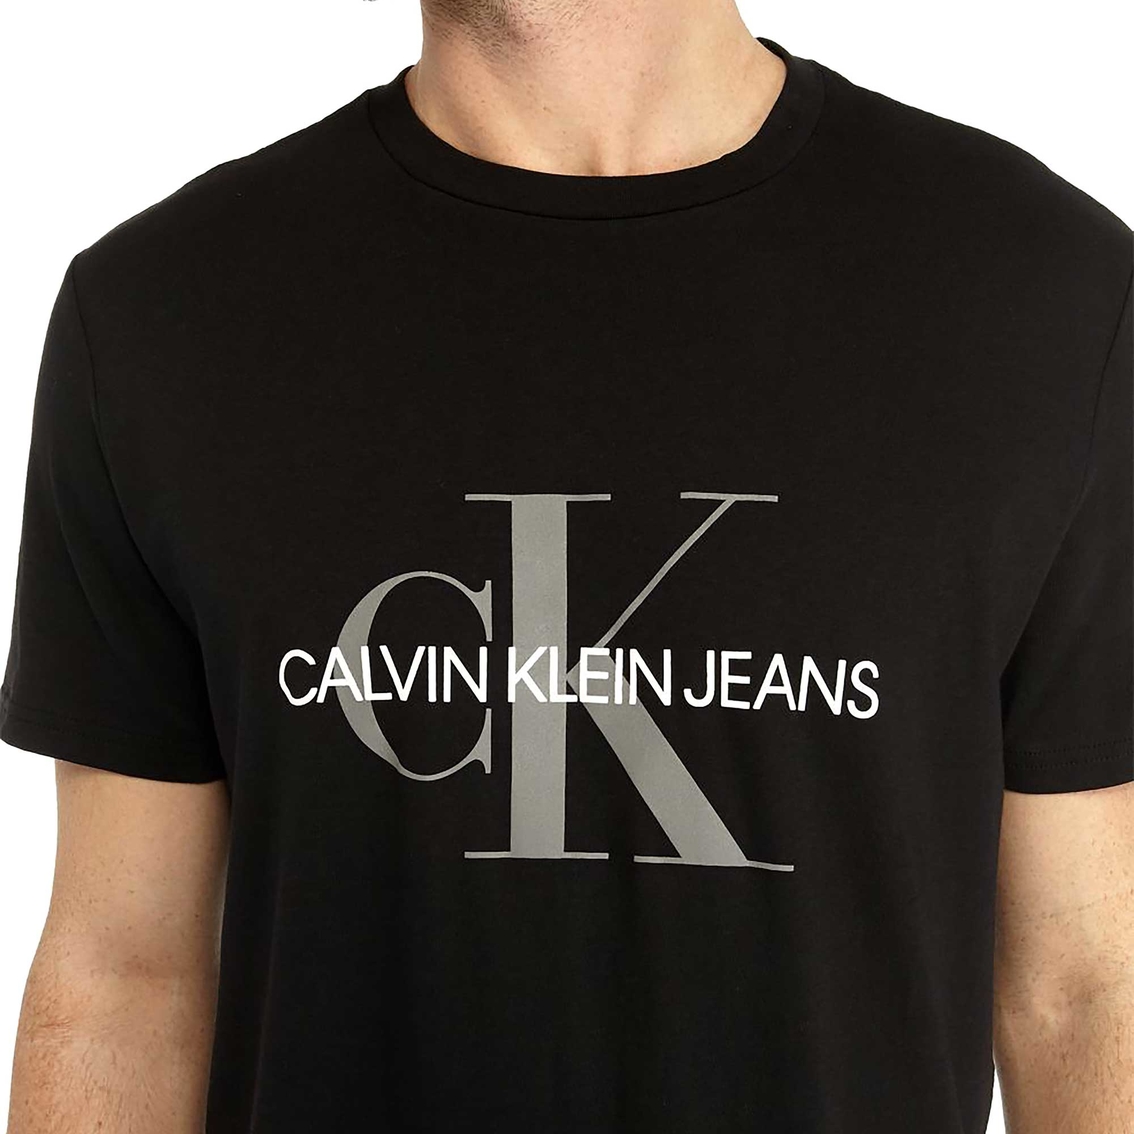 Calvin Klein Jeans Monogram Crew Tee | Shirts | Clothing & Accessories ...